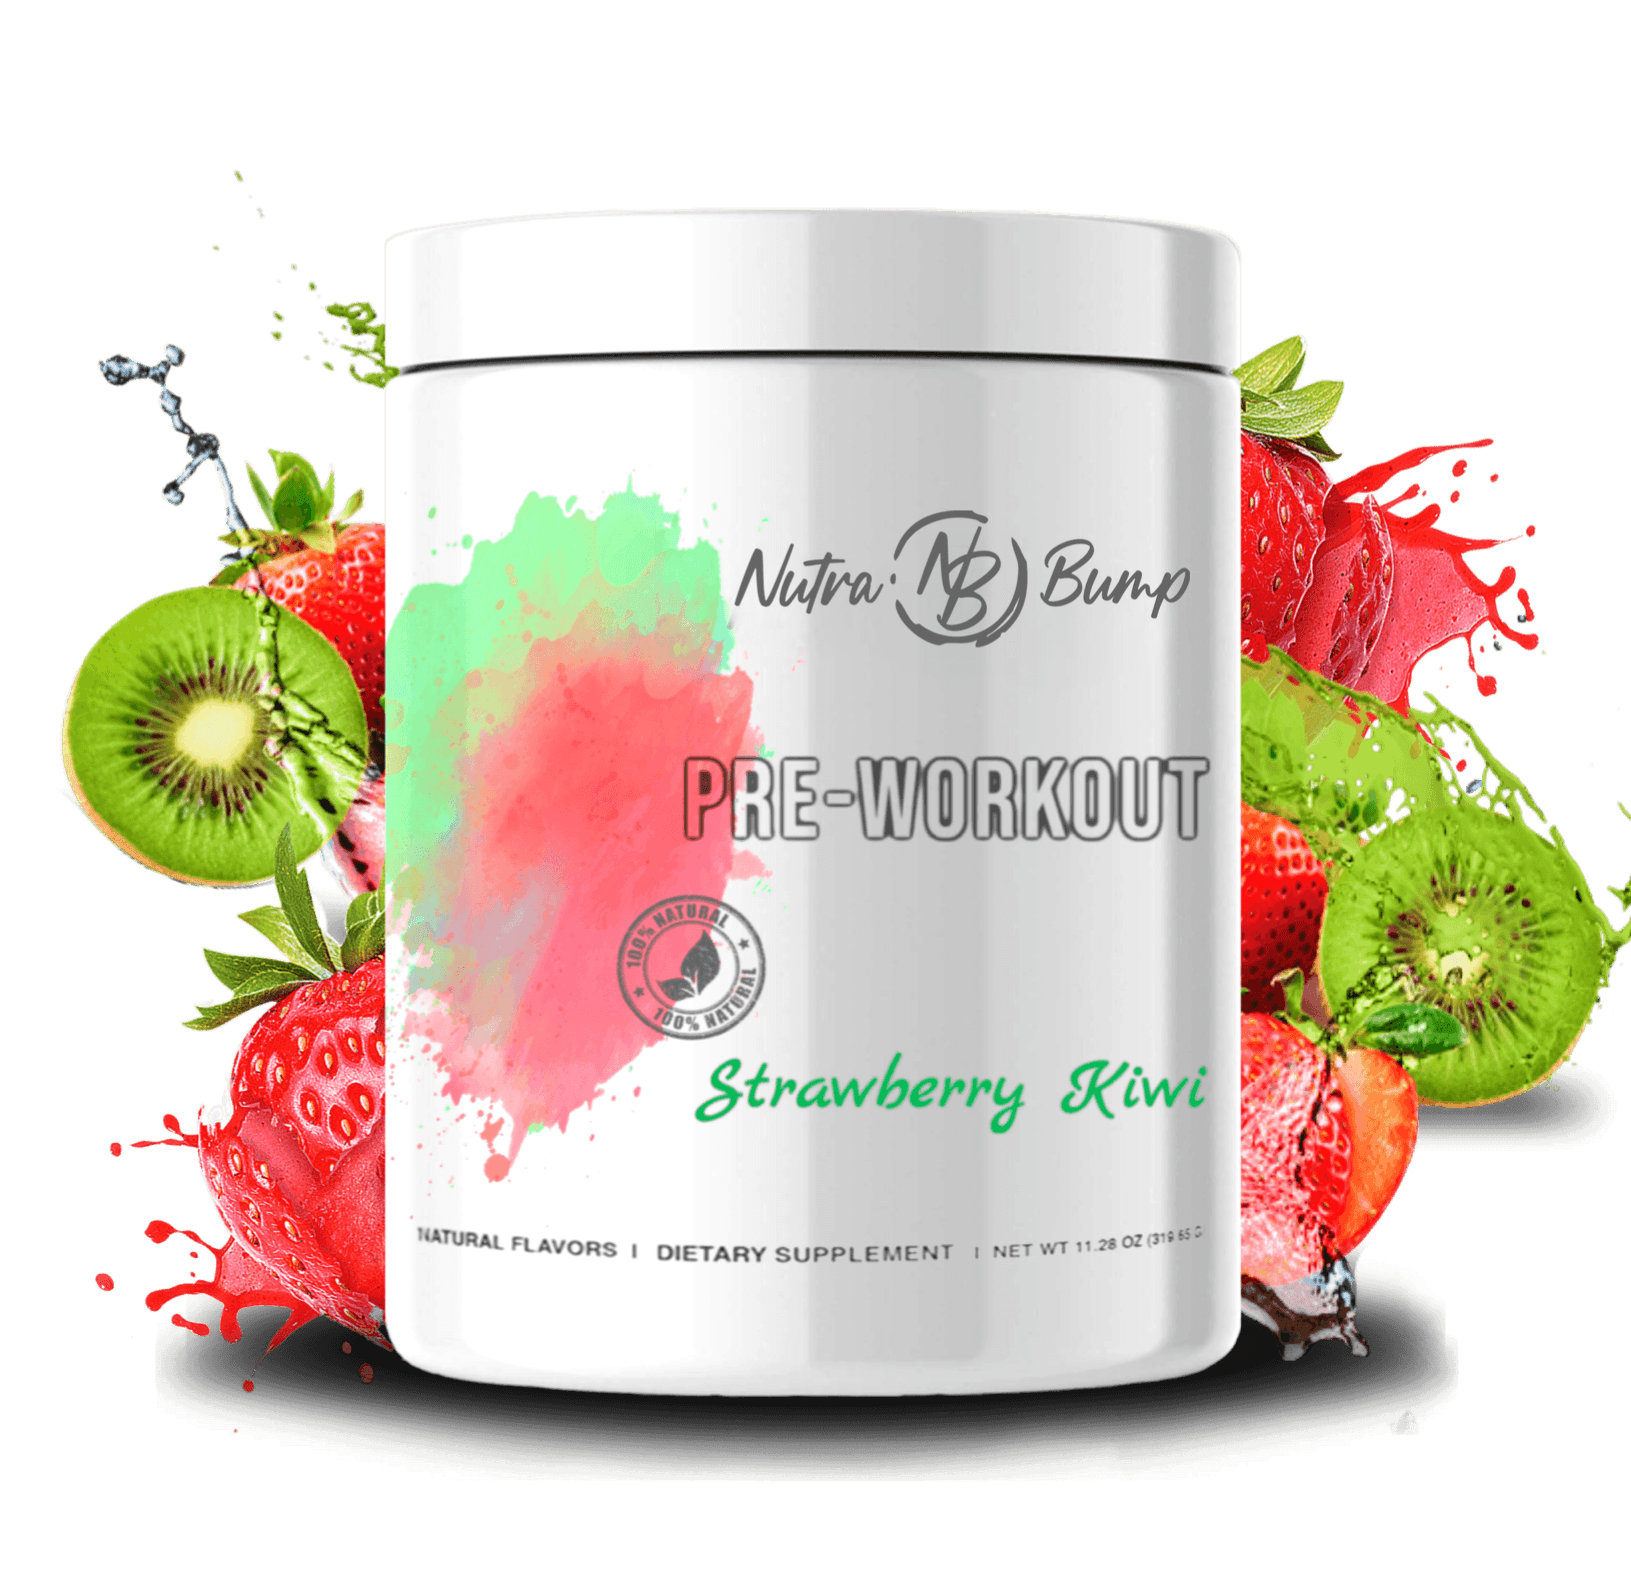 NutraBump Pregnancy Pre Workout Strawberry Kiwi - NutraBump Nutrition Pregnancy safe workout supplements bumped up - Pre Workout Drink Mix - nutrabump.com